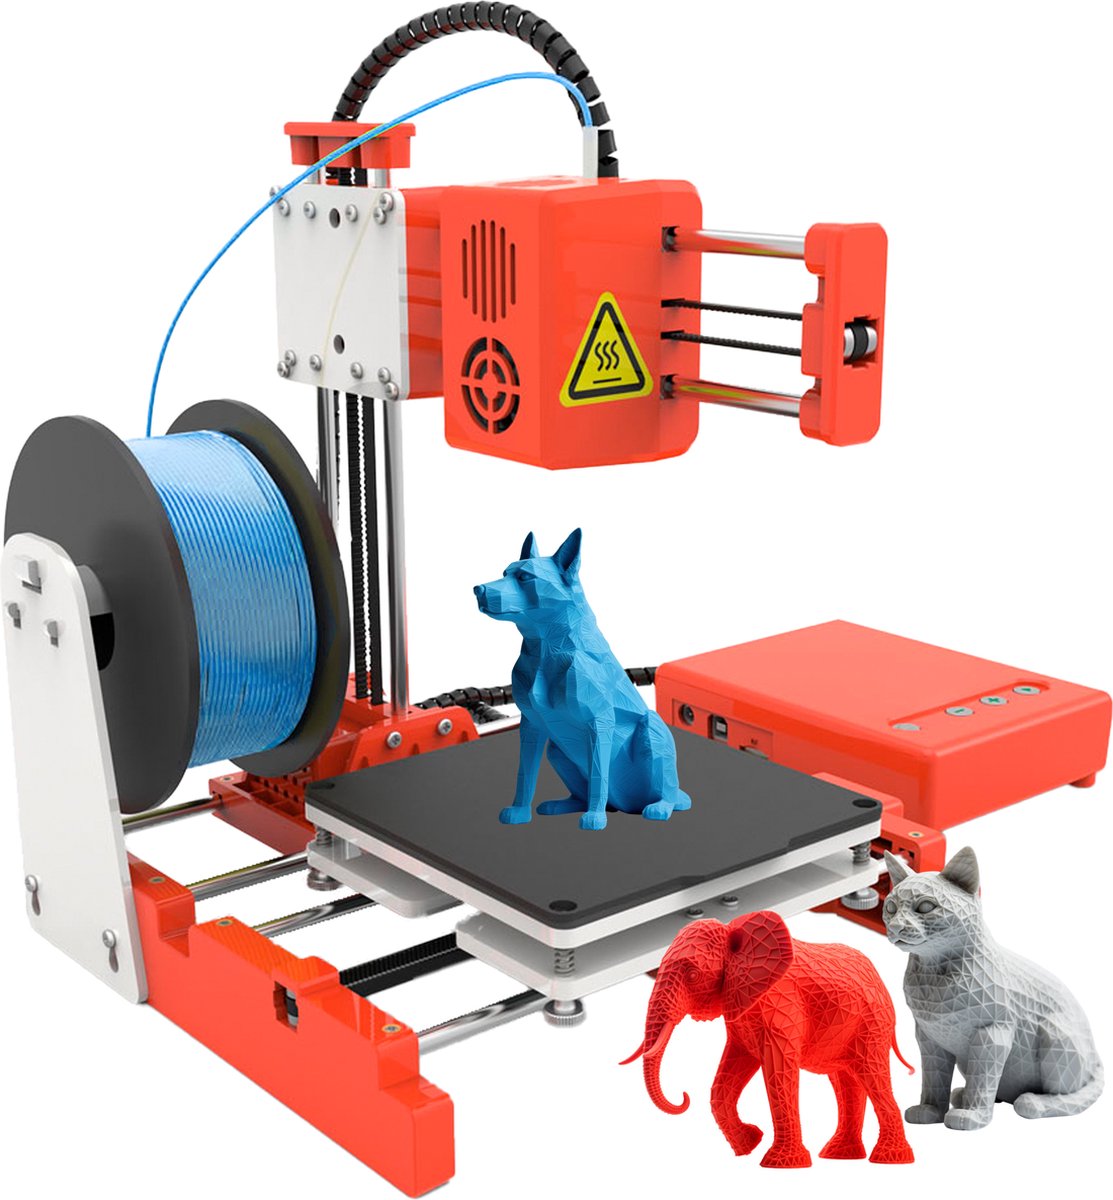 3D&Print 3D Printer Bouwpakket - Starterspakket Kinderen - Rood | bol.com